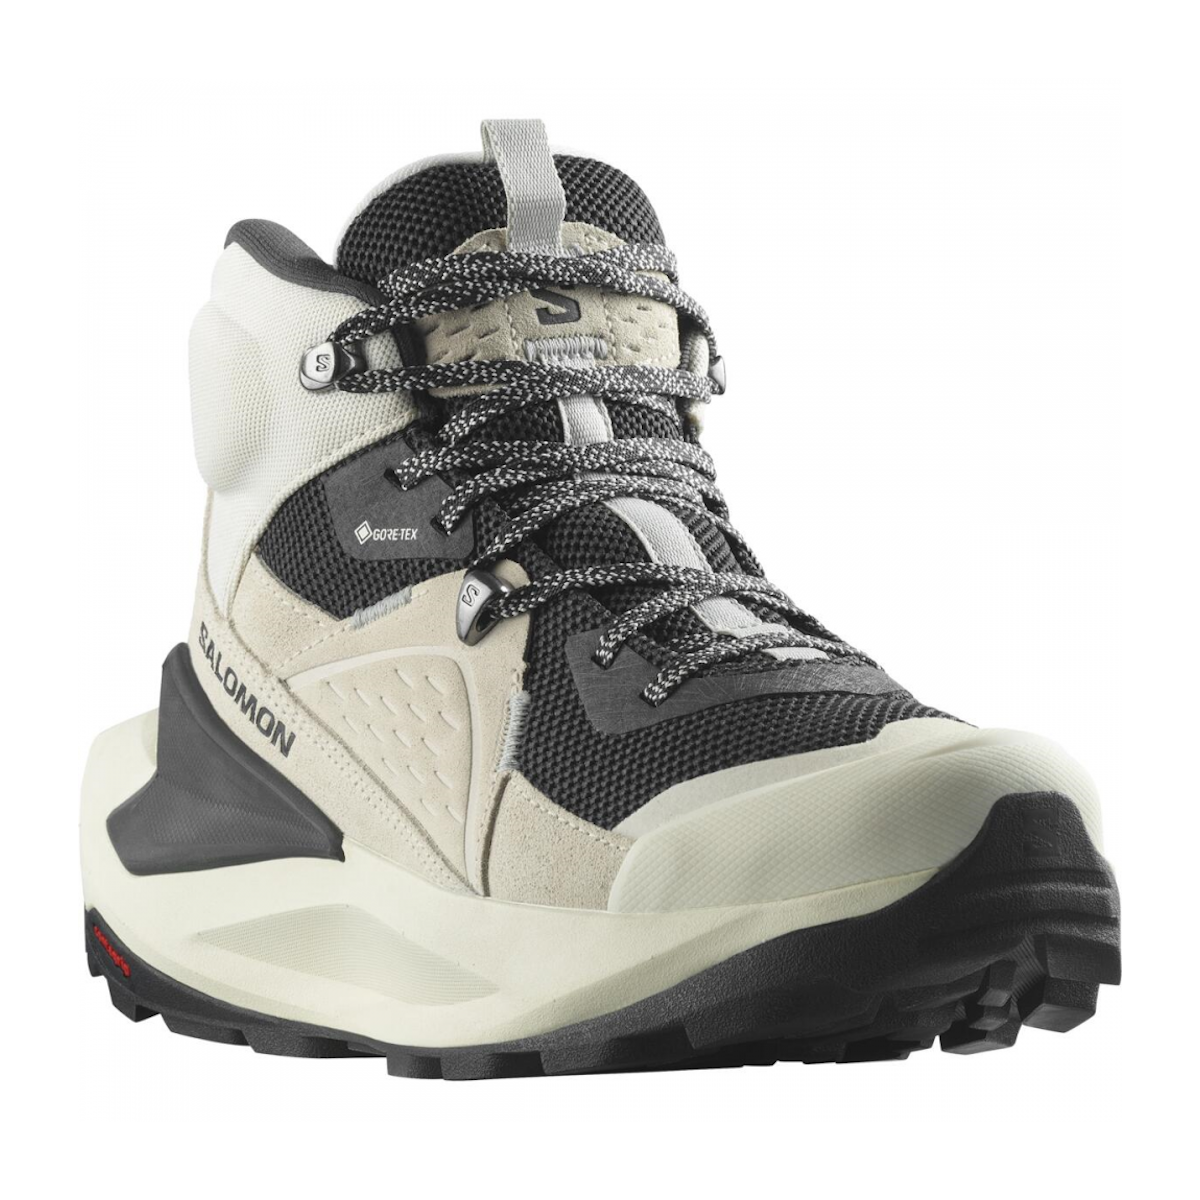 SALOMON ELIXIR MID GTX W hiking footwear - white/black